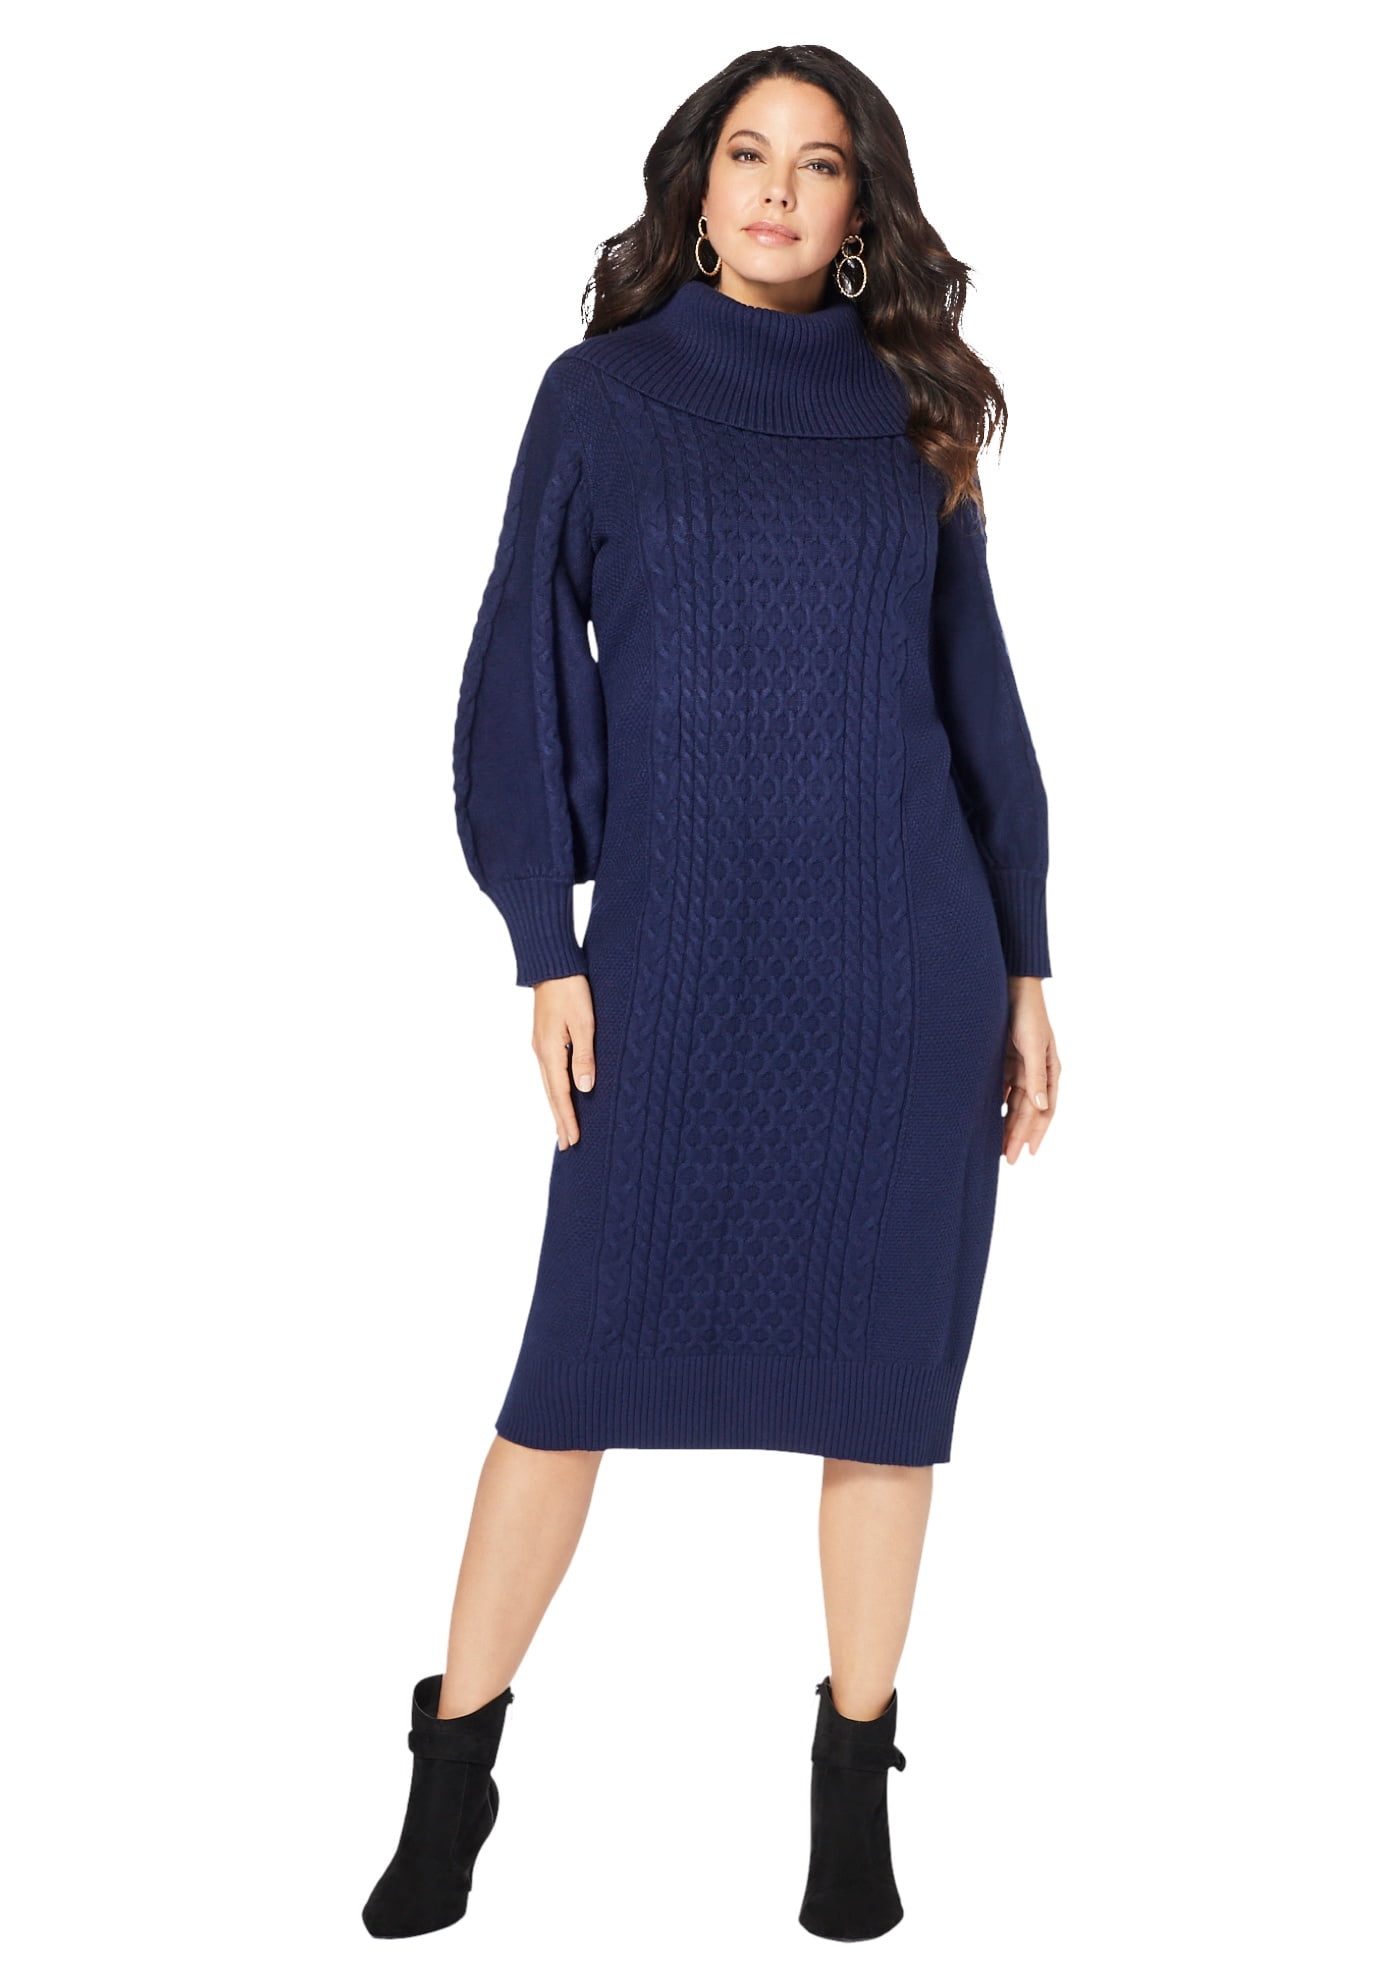 Roaman's Women's Plus Size Turtleneck Sweater Dress Dress - Walmart.com